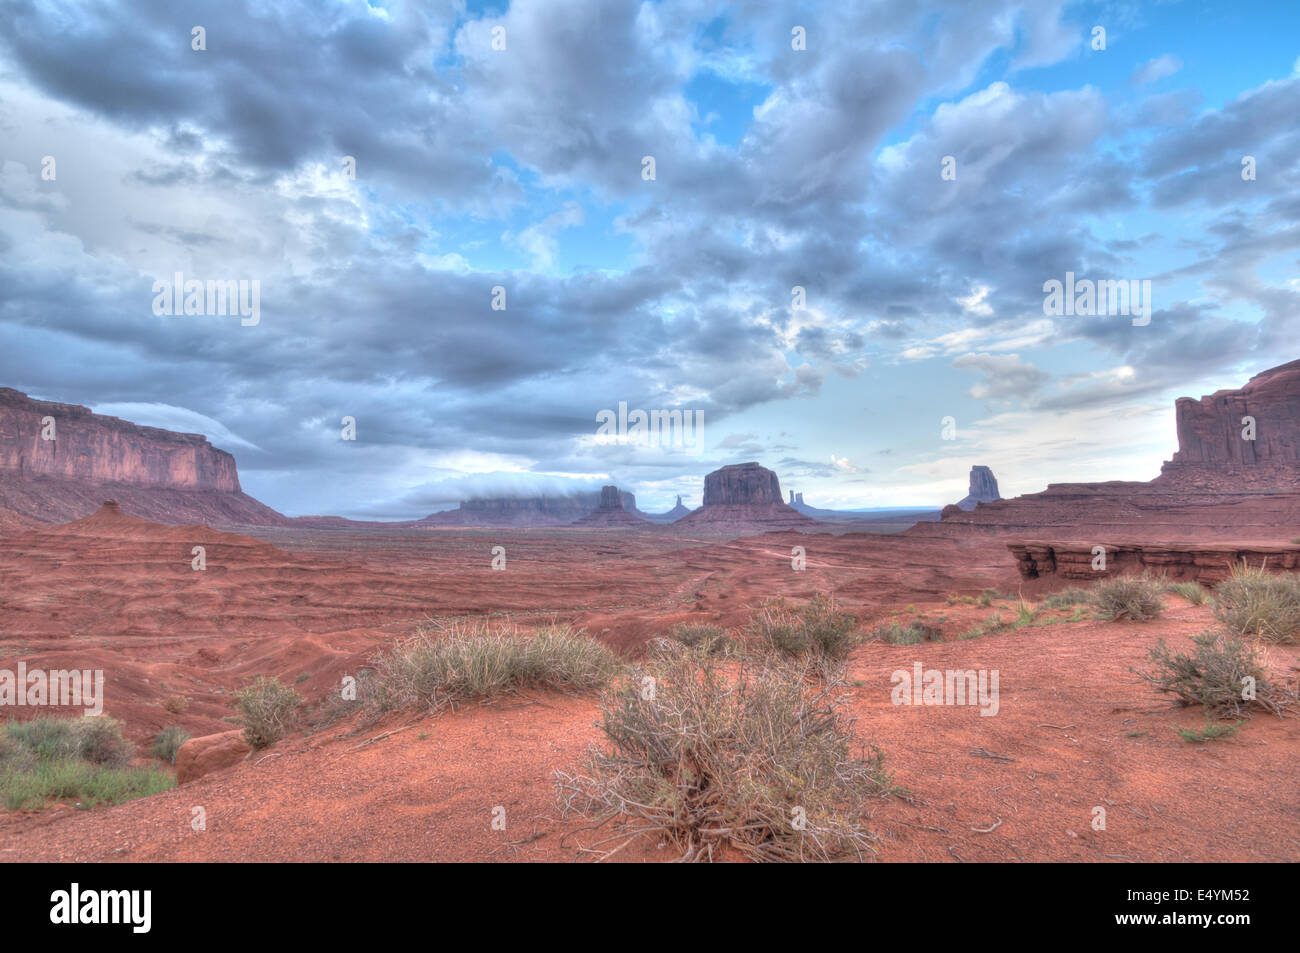 Monument valley panoramic view Stock Photo